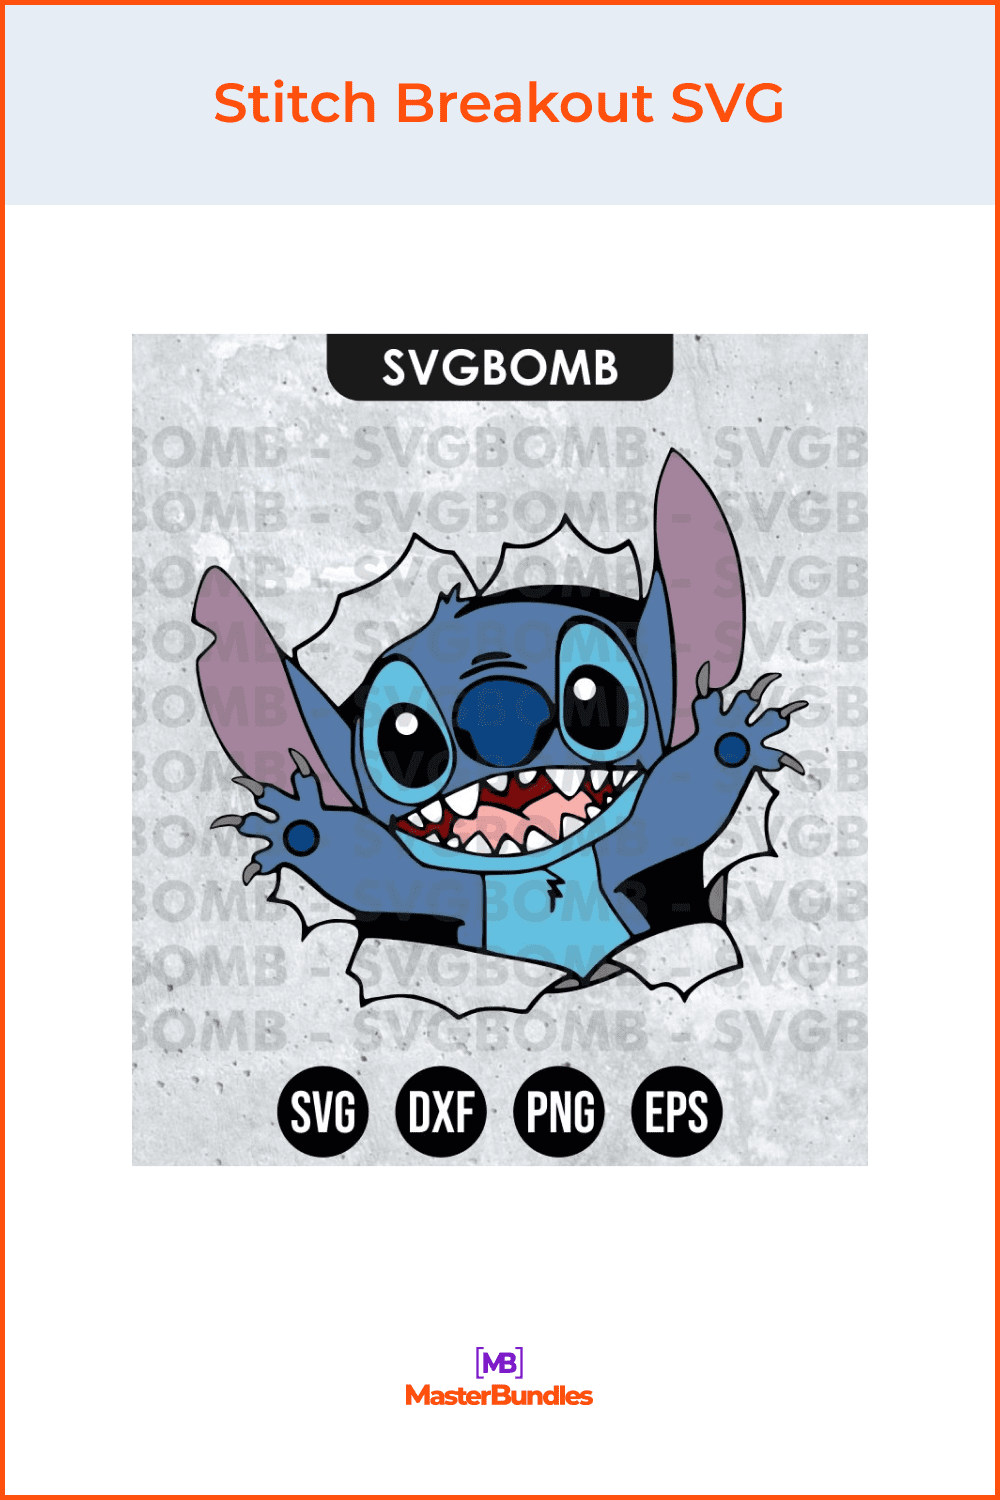 Stitch Breakout SVG.